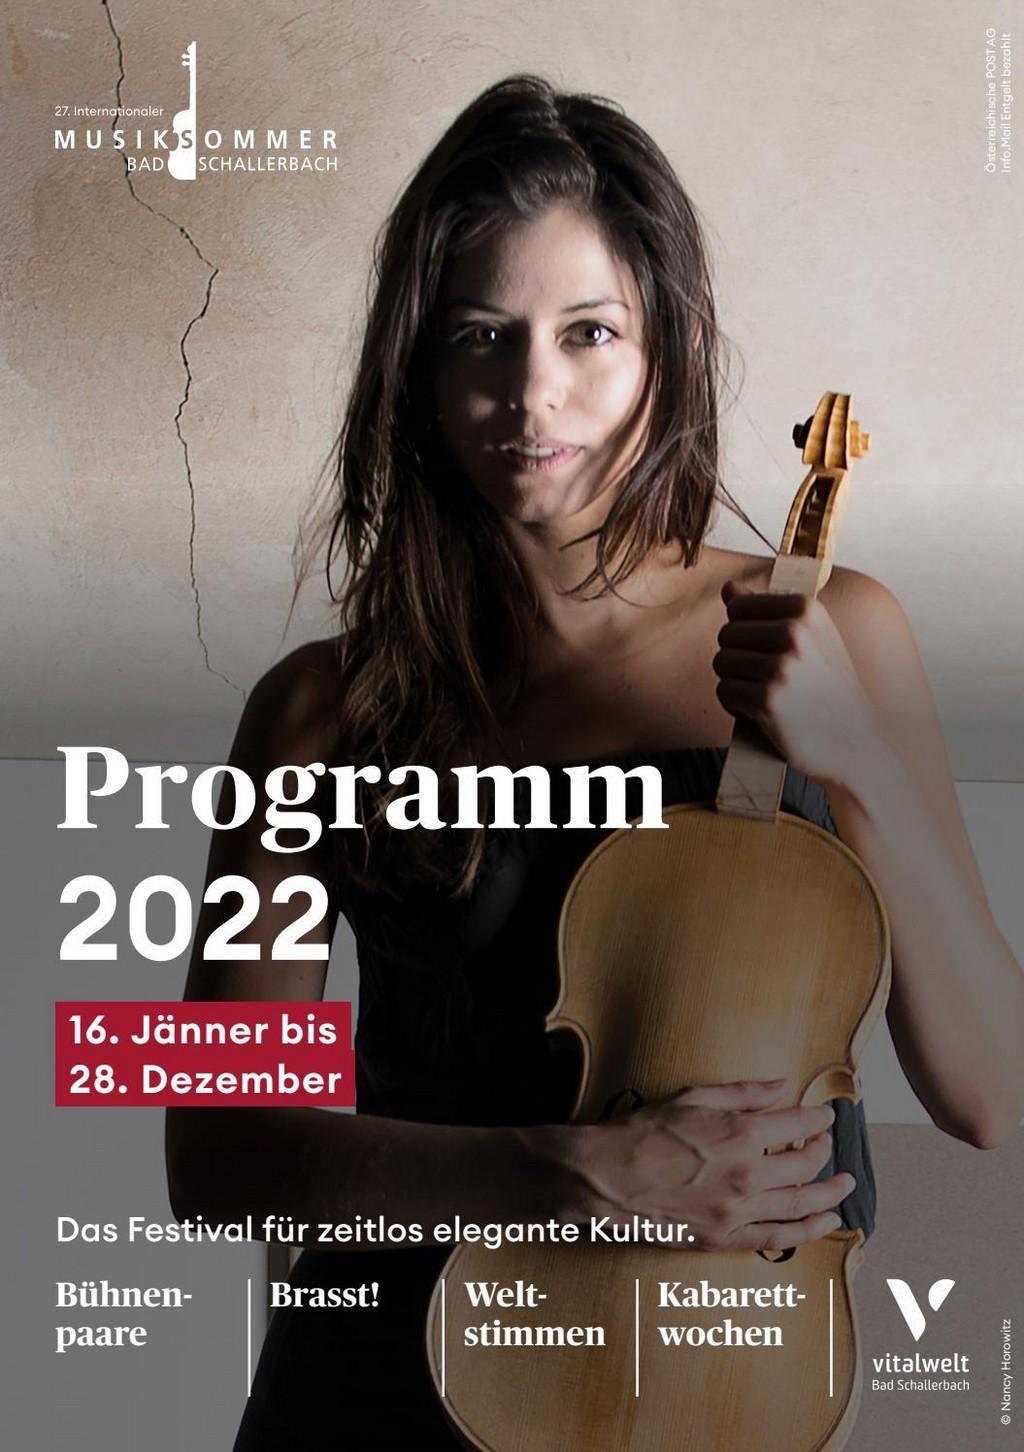 Lineup Poster 27. Internationaler Musiksommer Bad Schallerbach 2022